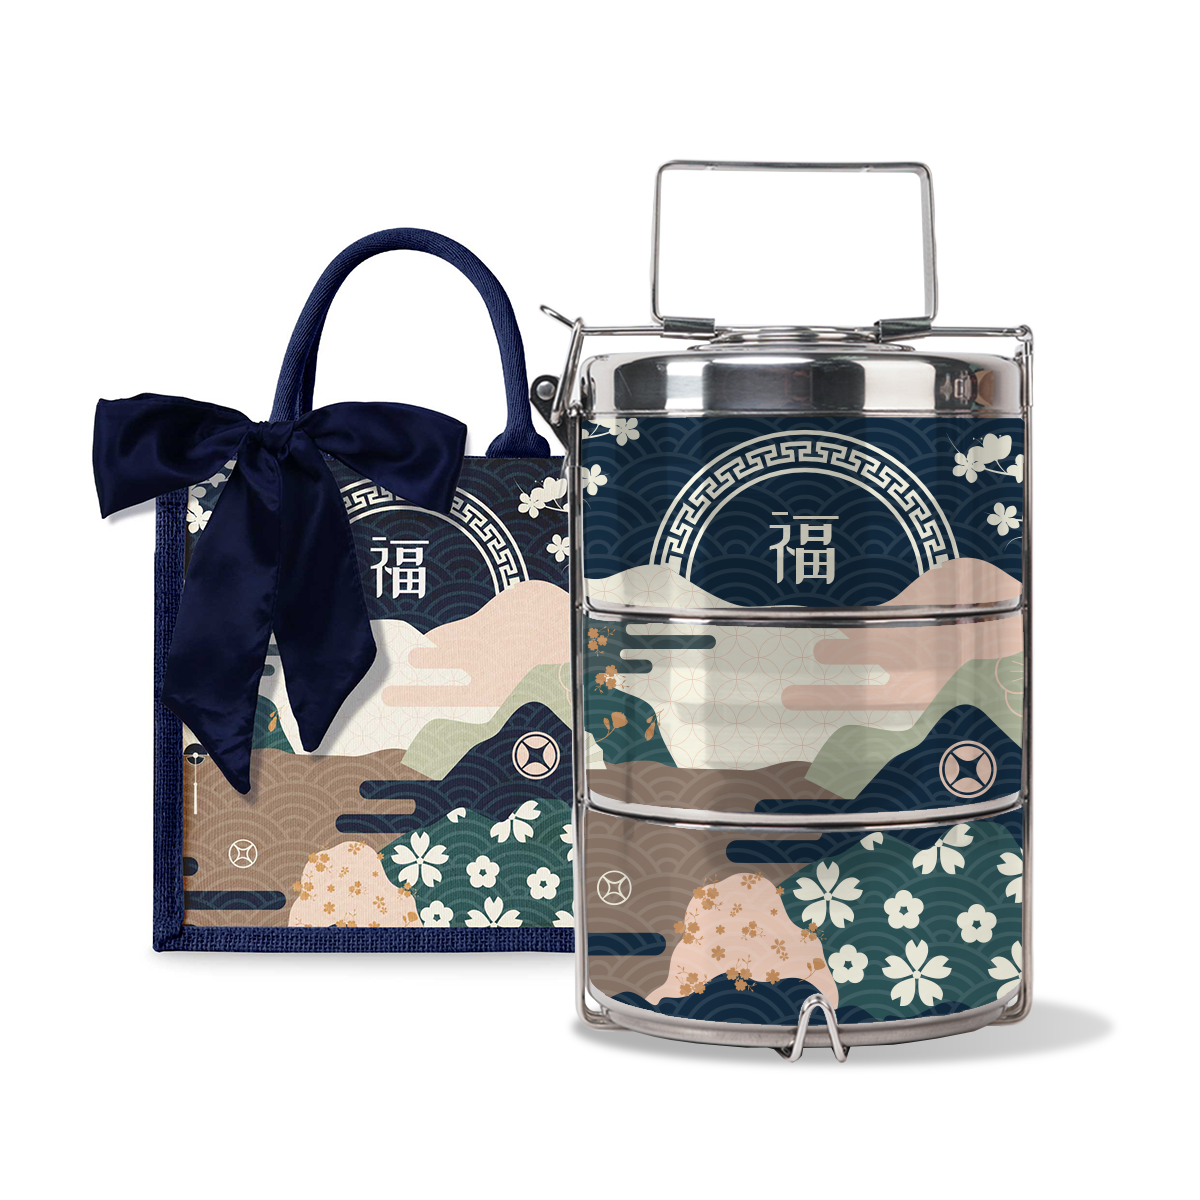 Fortune Garden (Navy Design) - Lunch Tote Bag with Three-Tier Tiffin Carrier